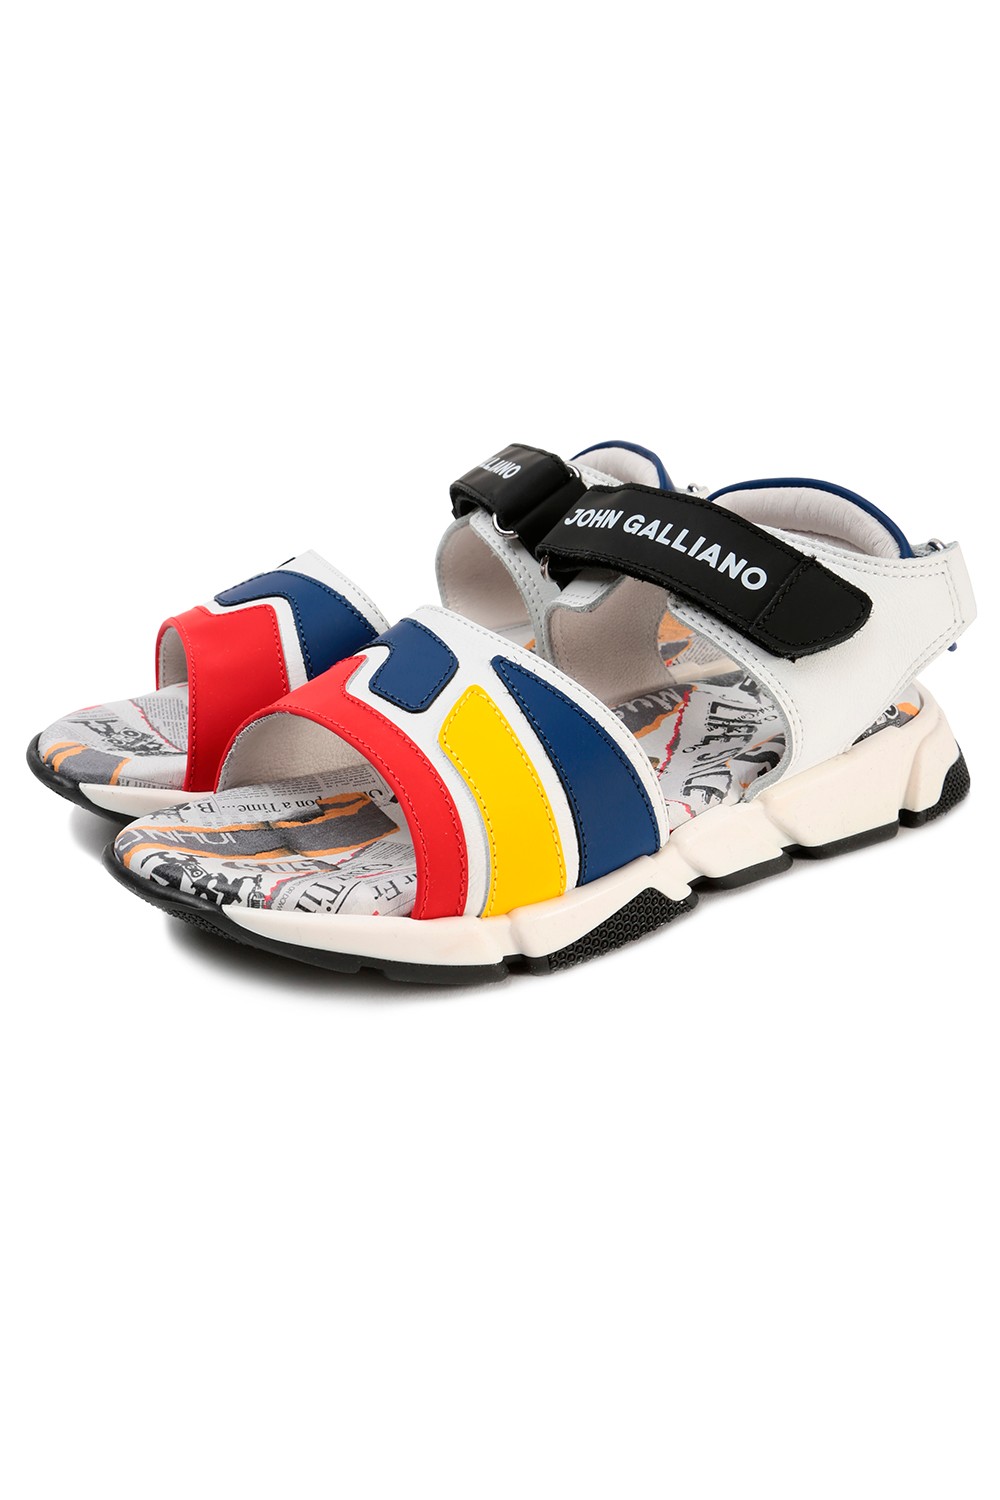 John Galliano Разноцветные сандалии на липучках